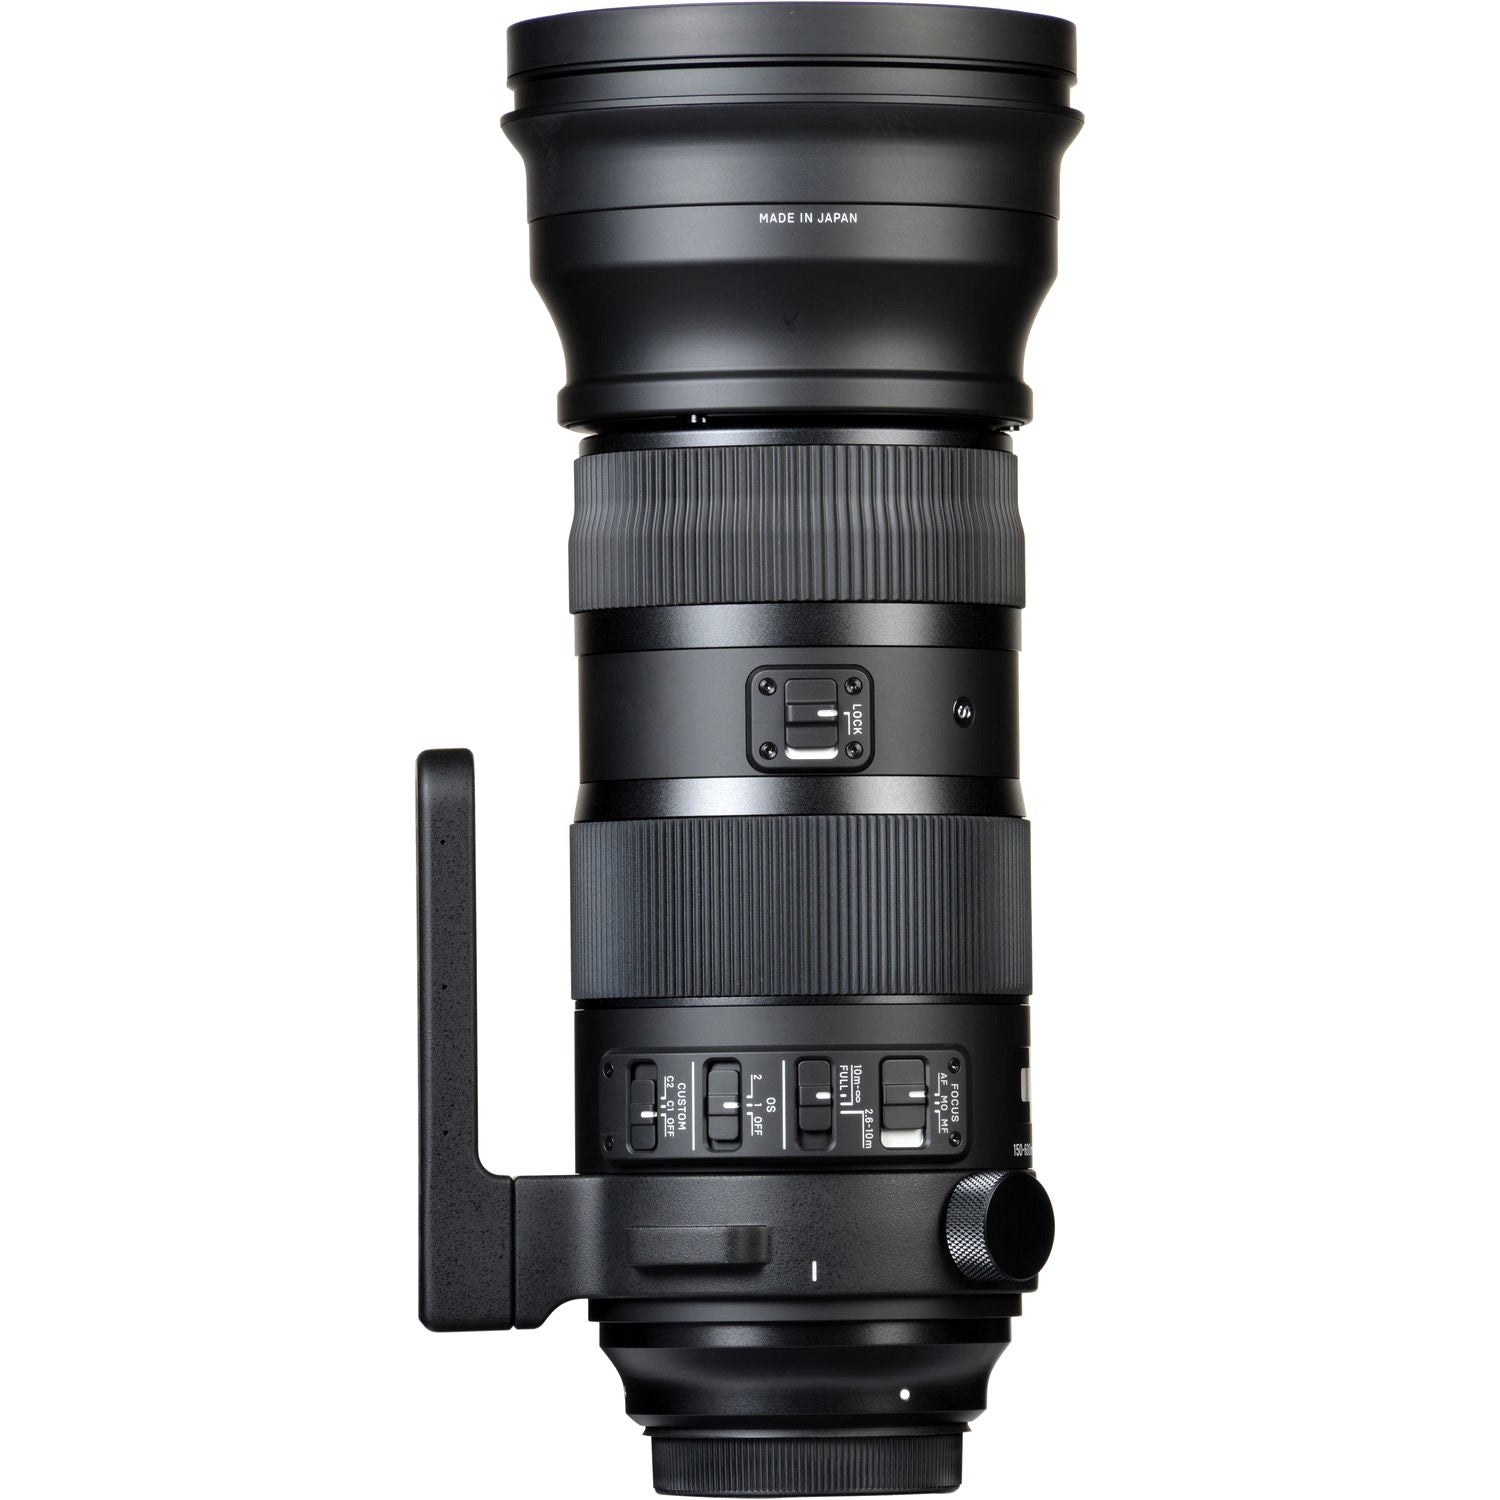 Sigma 150-600mm F5-6.3 DG DN OS Sports Lens (Sony E Mount)